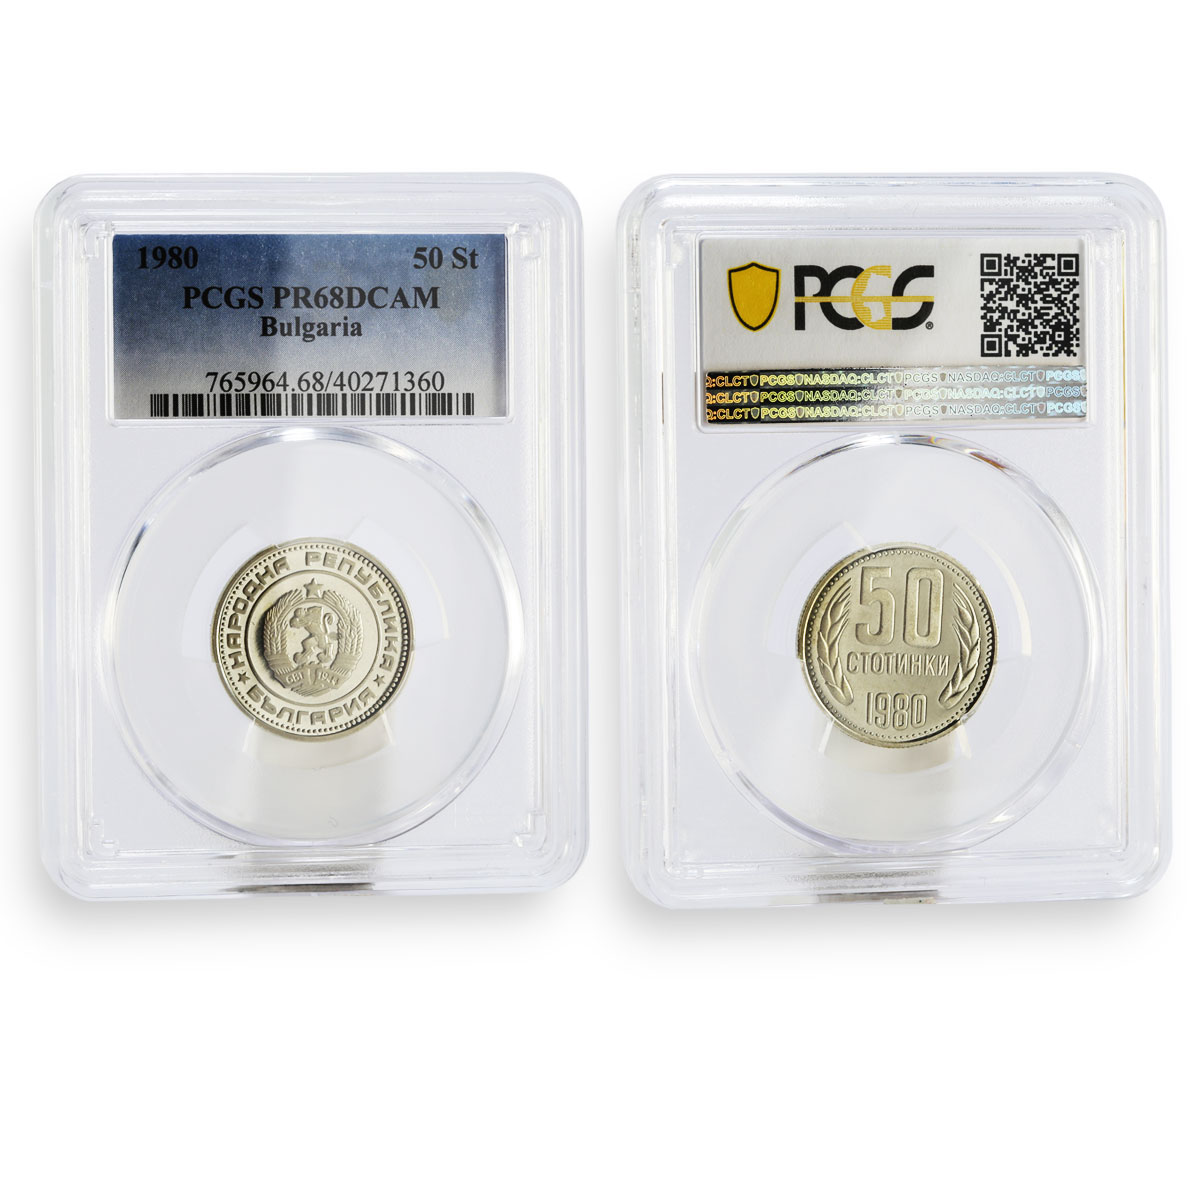 Bulgaria complete set of 7 coins PR-65 - PR-68 PCGS proof 1980